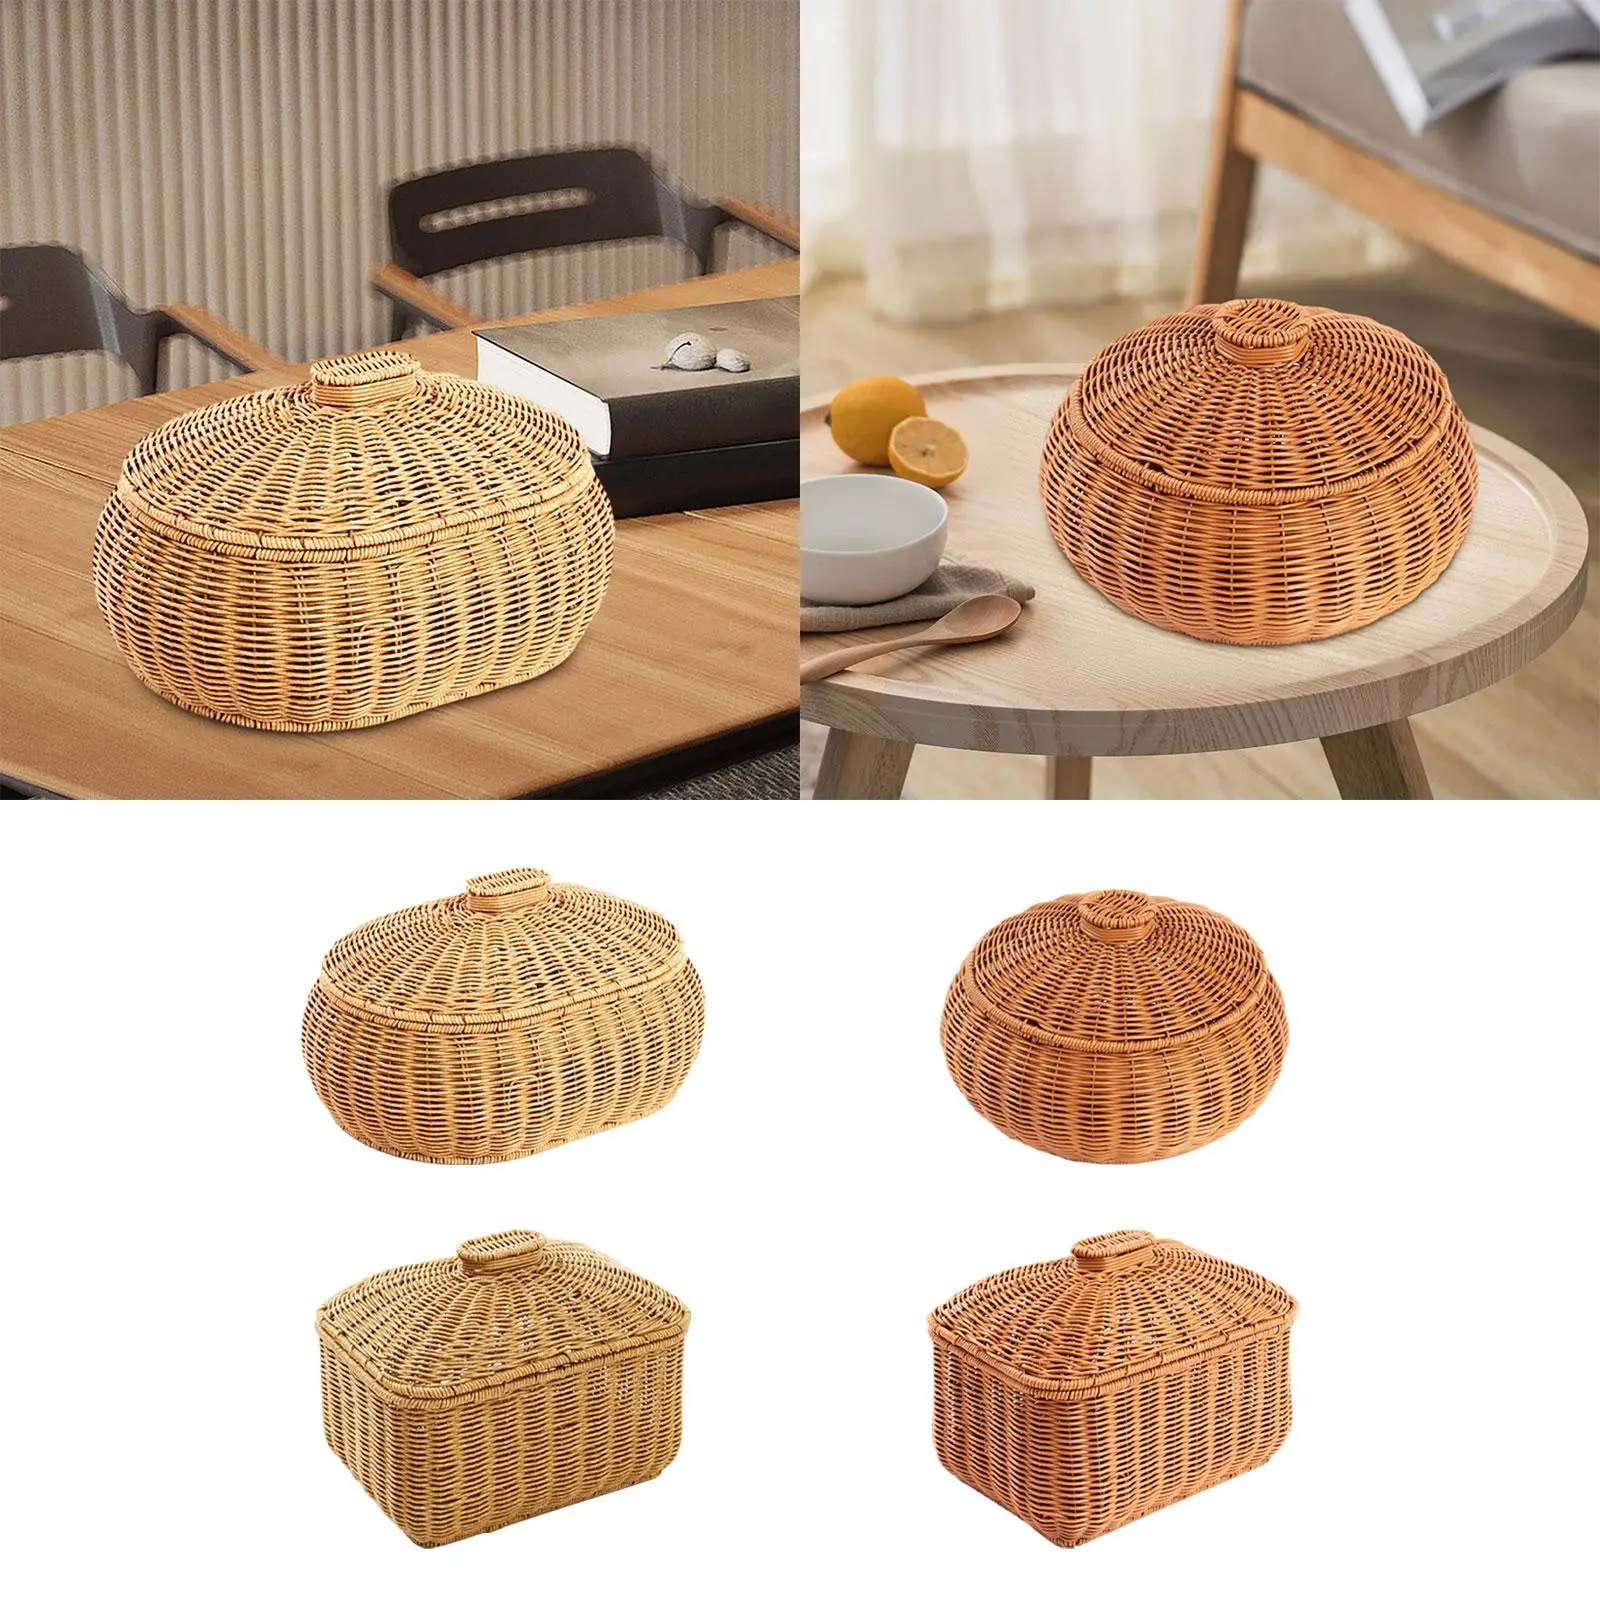 Handwoven Basket Desk Clutter Organization Stylish with Lid Home Organizer for Bathroom Living Room Restaurant Shelves Bedroom